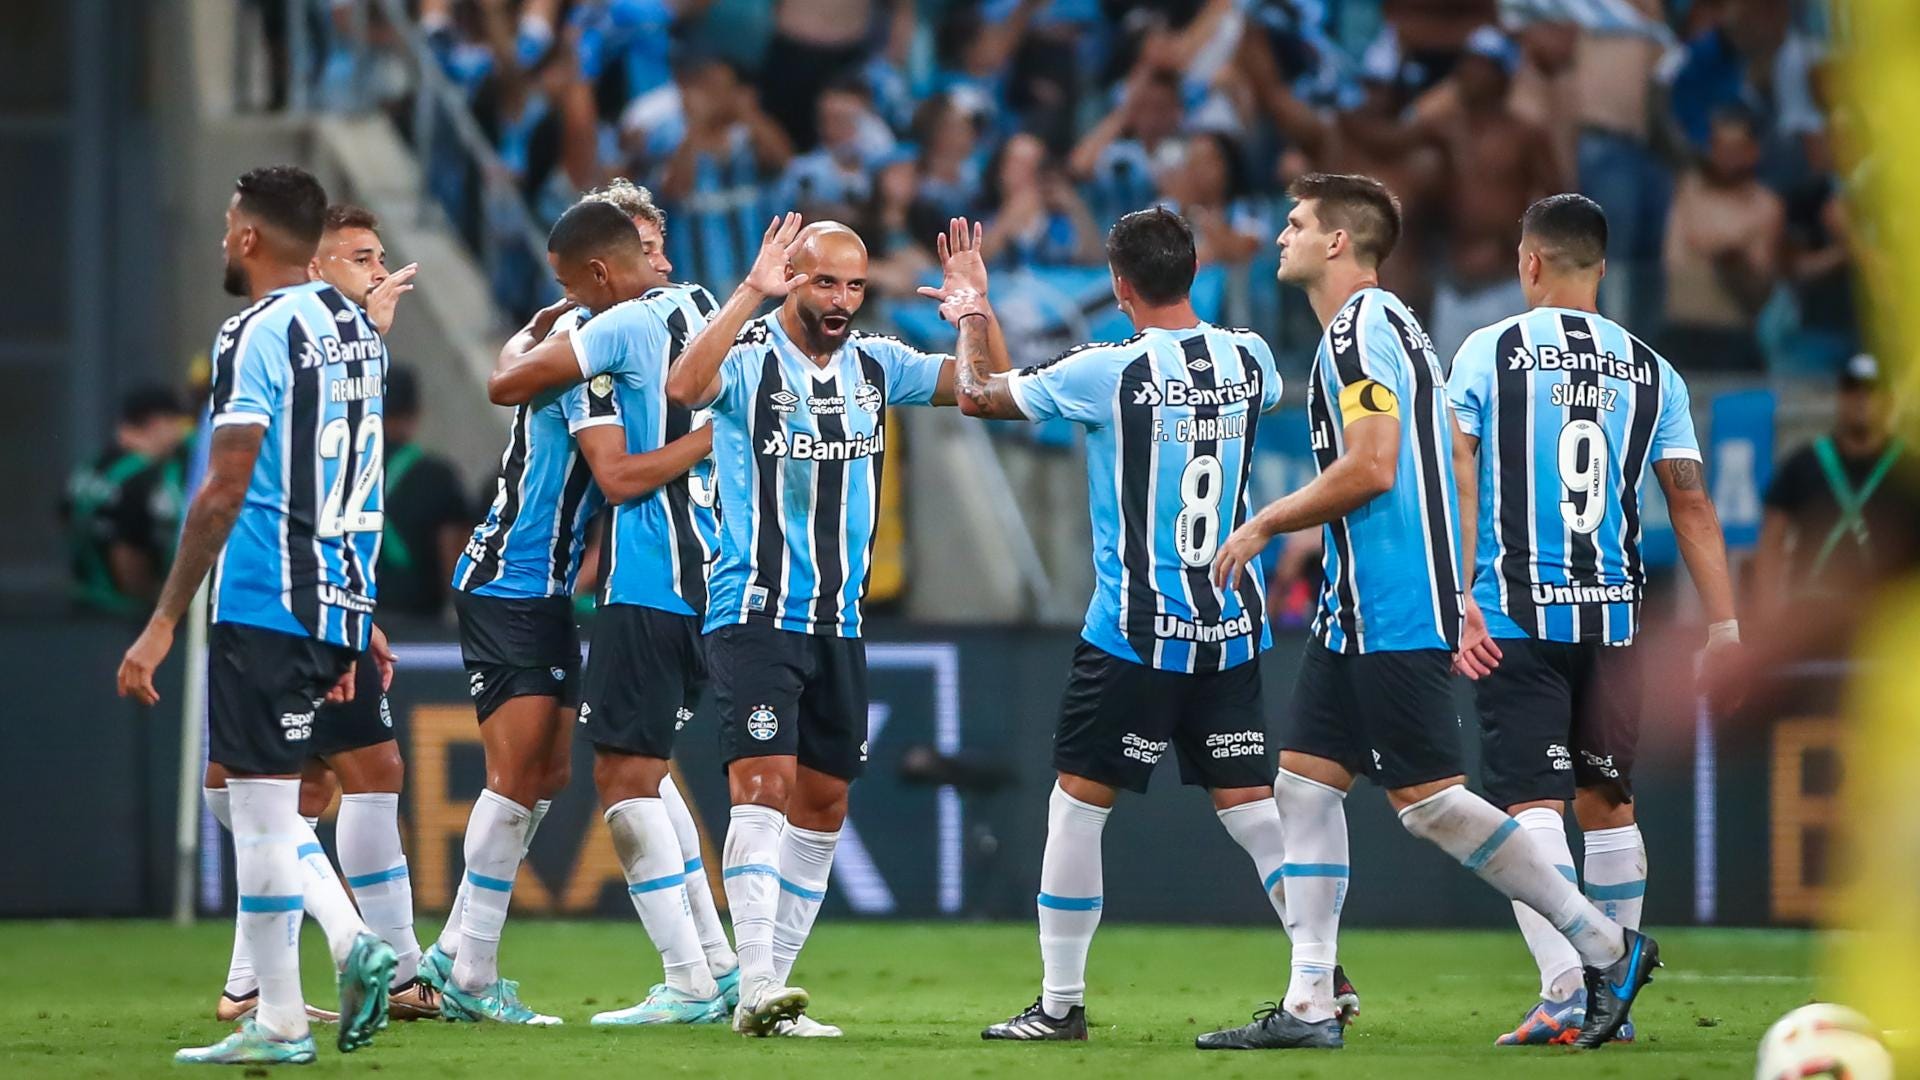 Grêmio vs Santos: A Clash of Football Titans